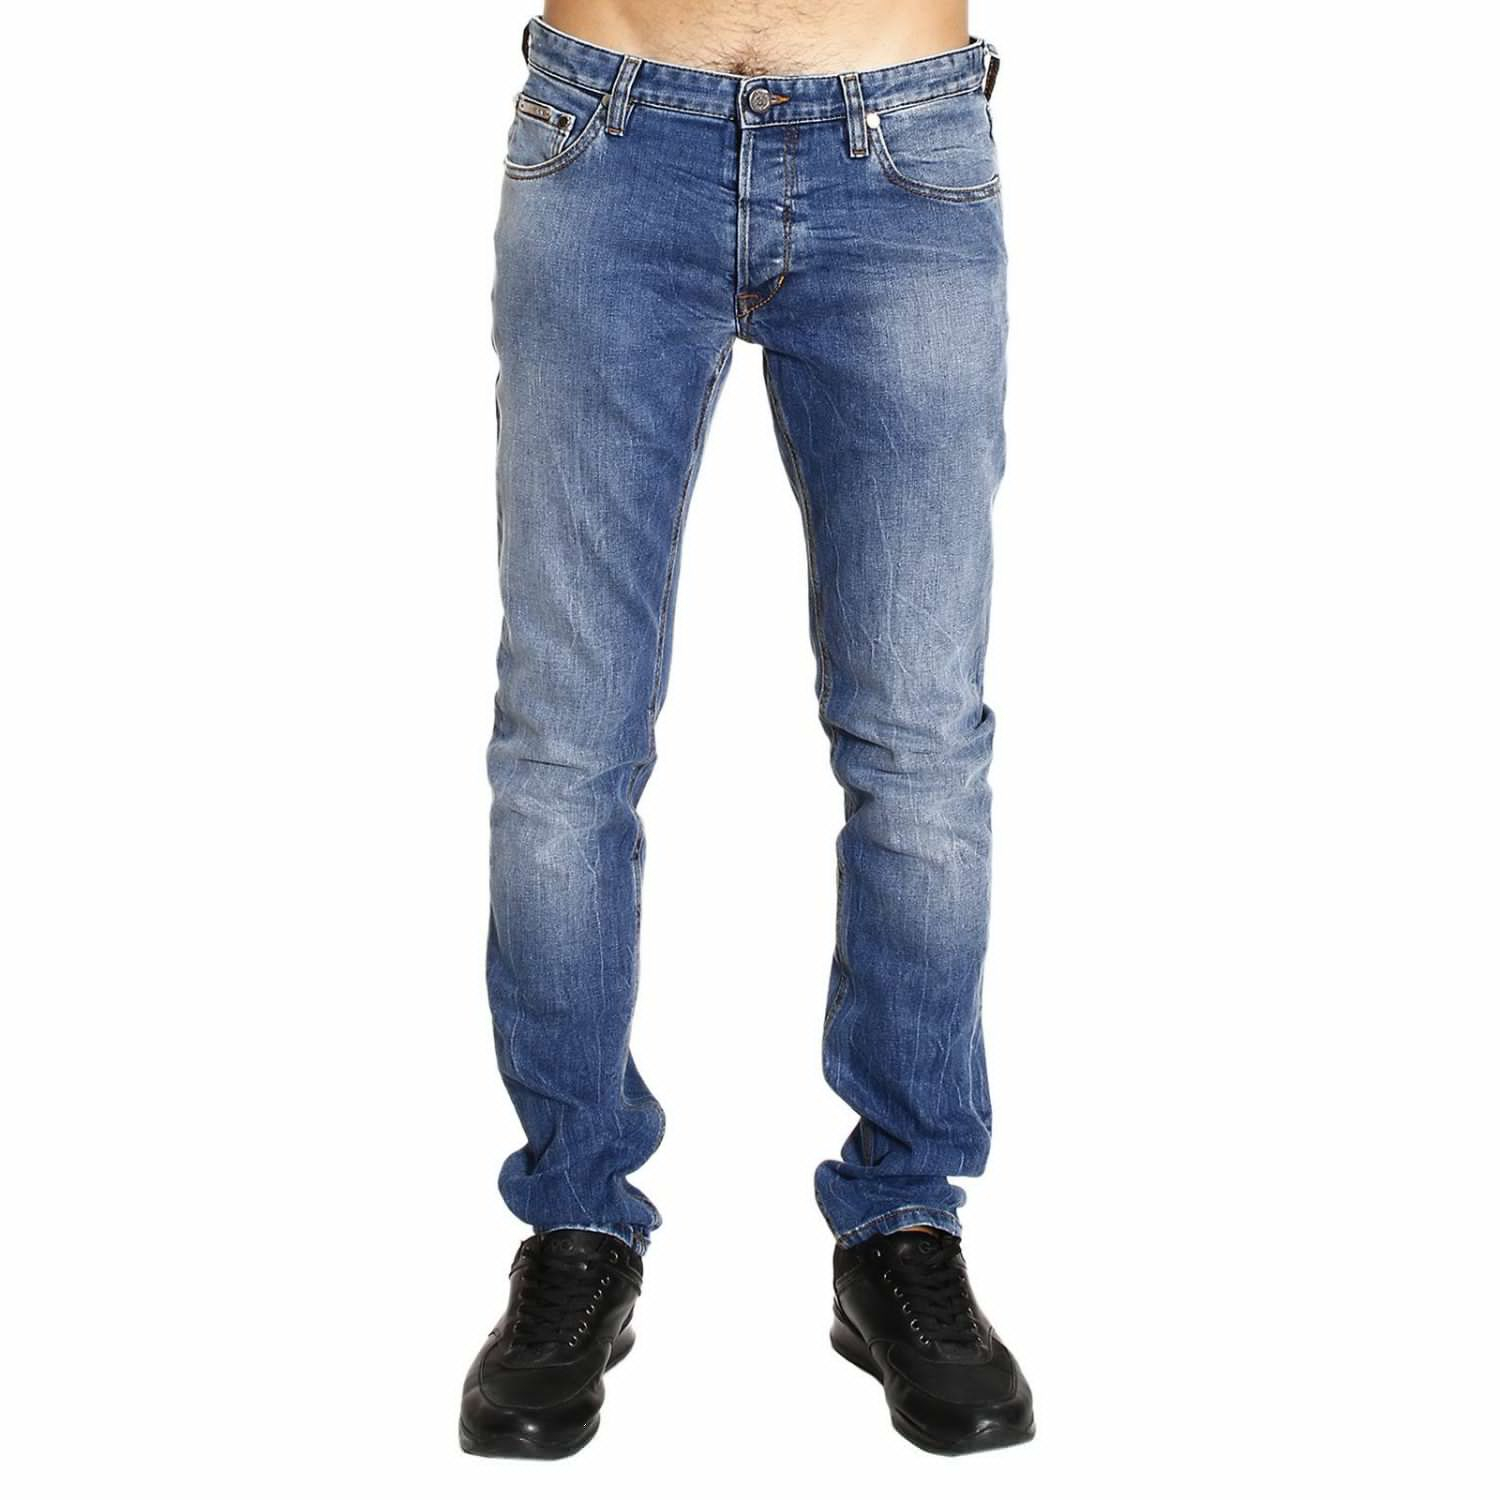 Lyst - Roberto Cavalli Jeans Denim Used Slim Stretch in Blue for Men